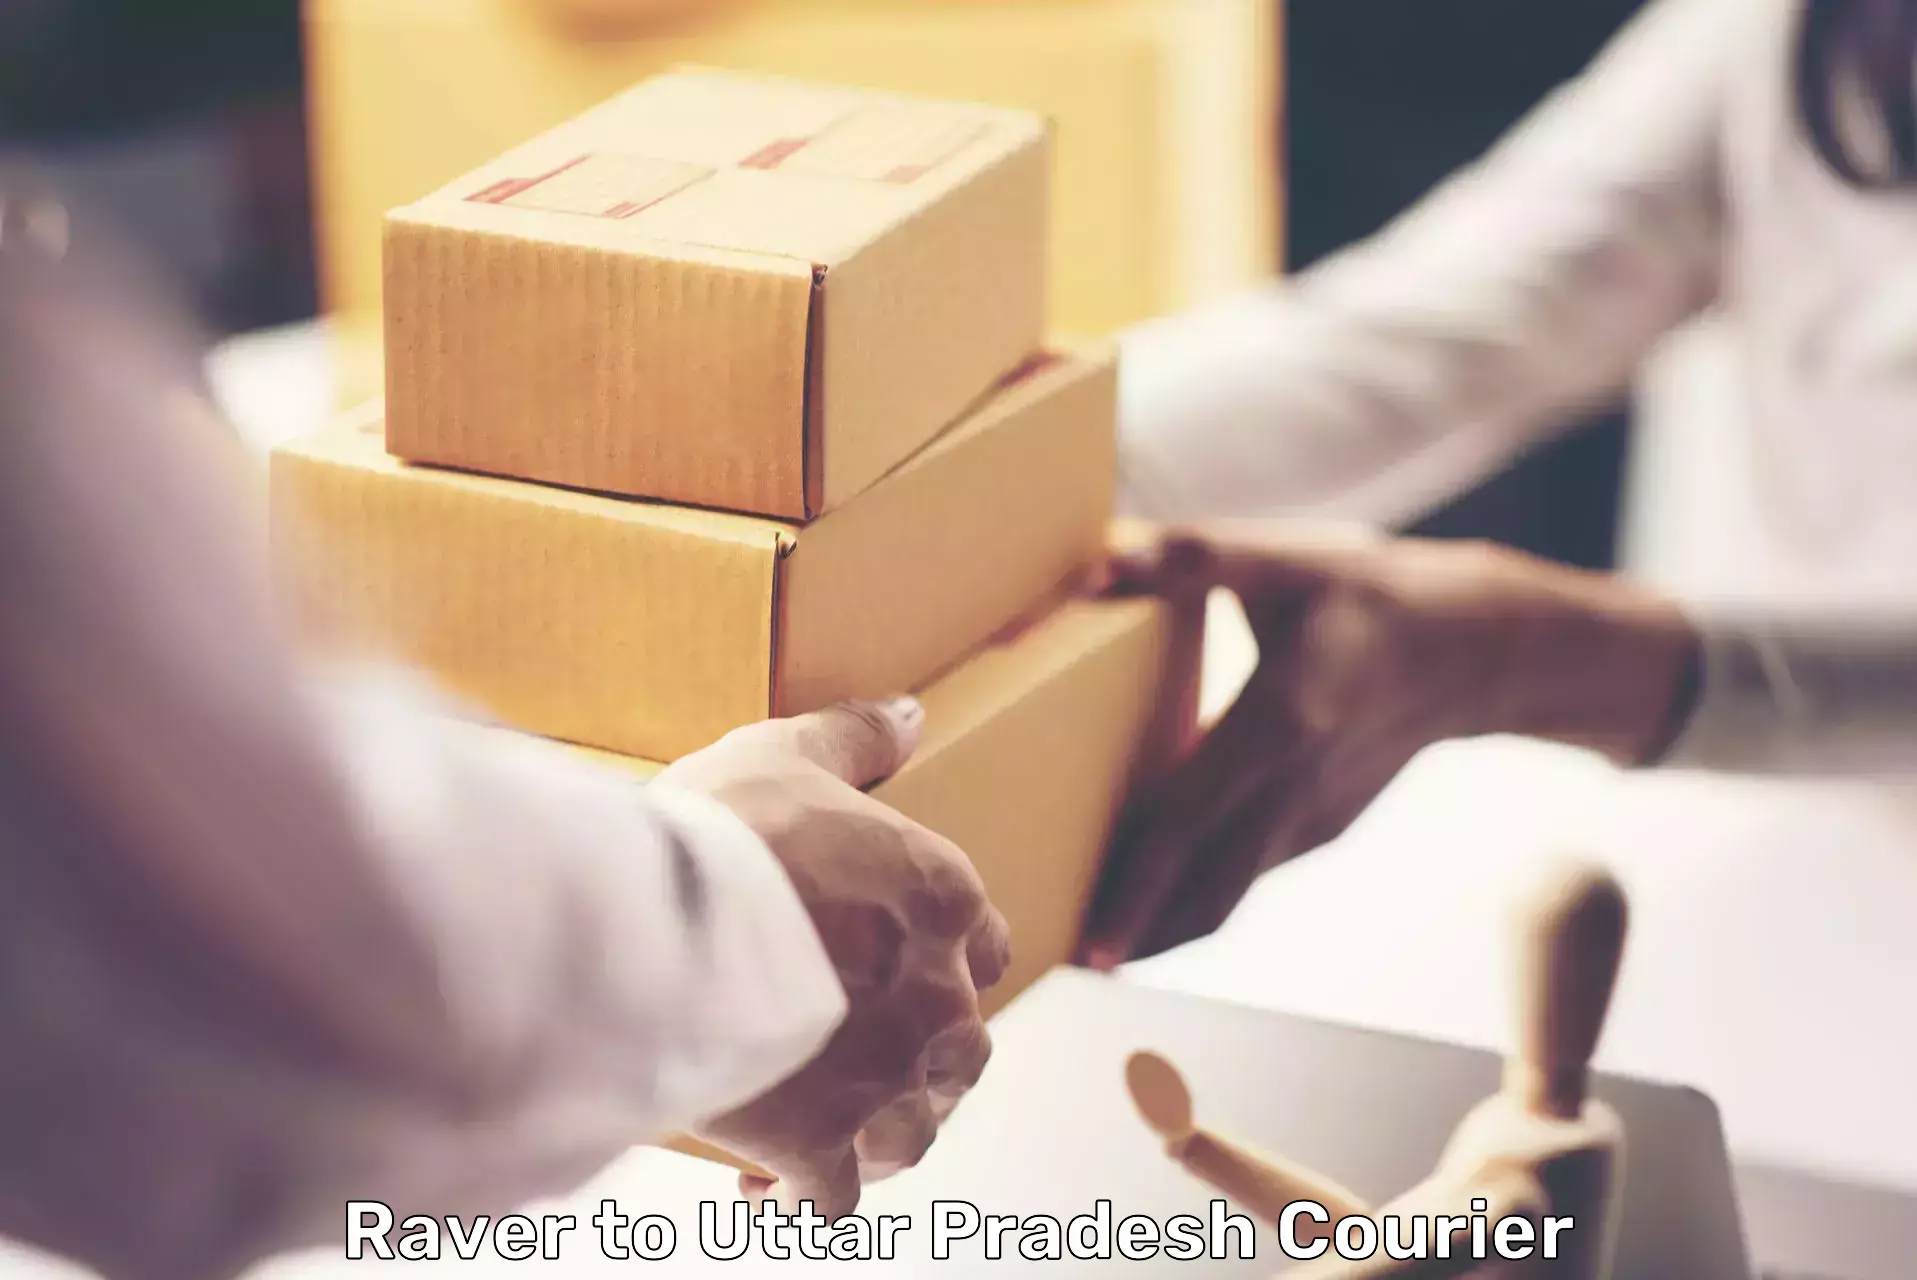 Nationwide courier service Raver to Uttar Pradesh